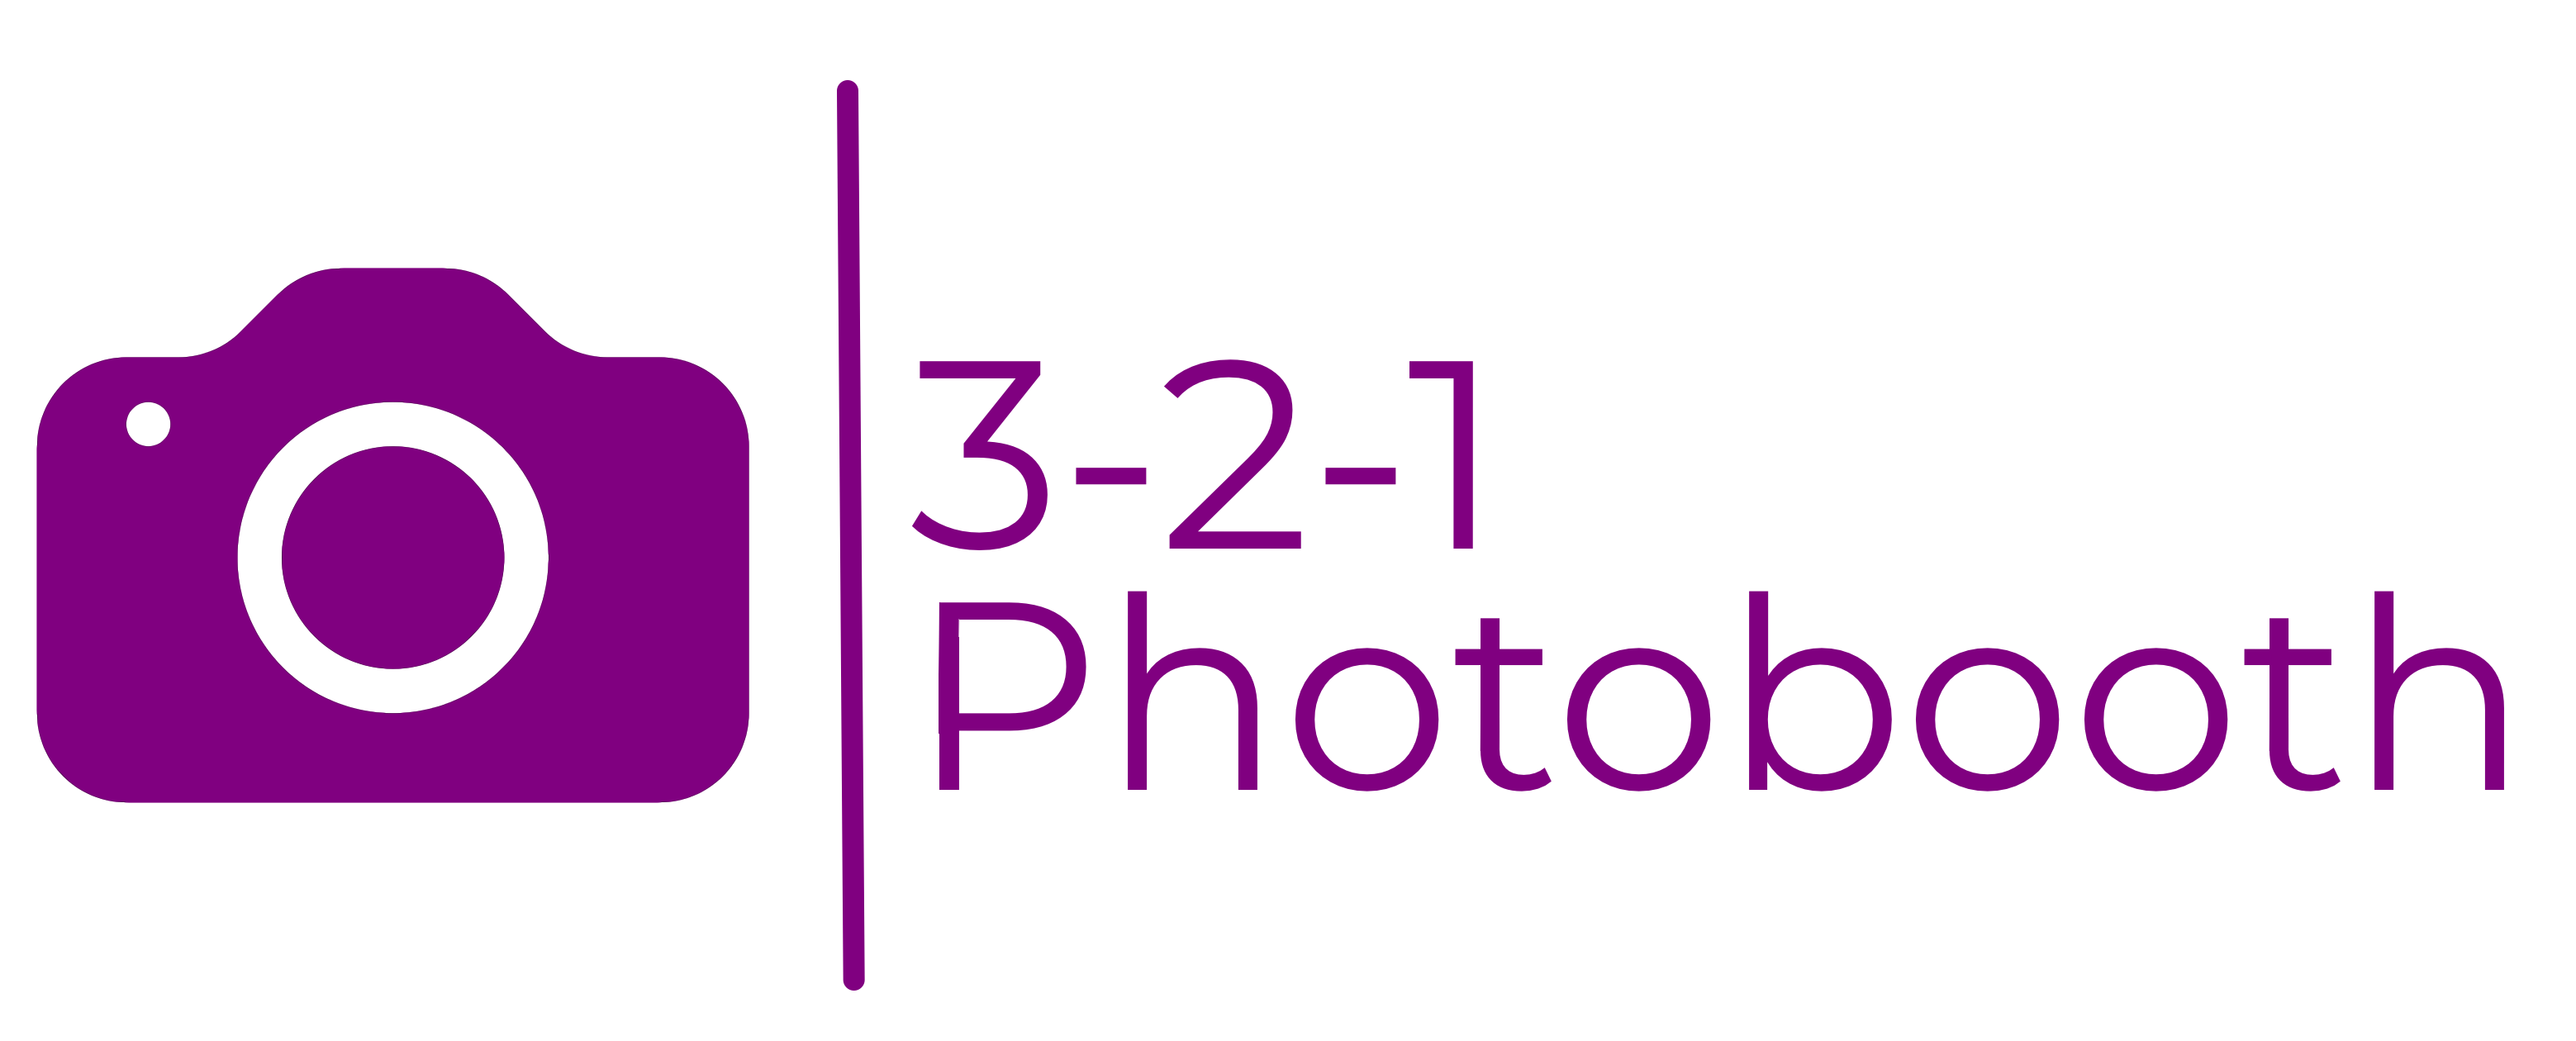 321 Photoobooth